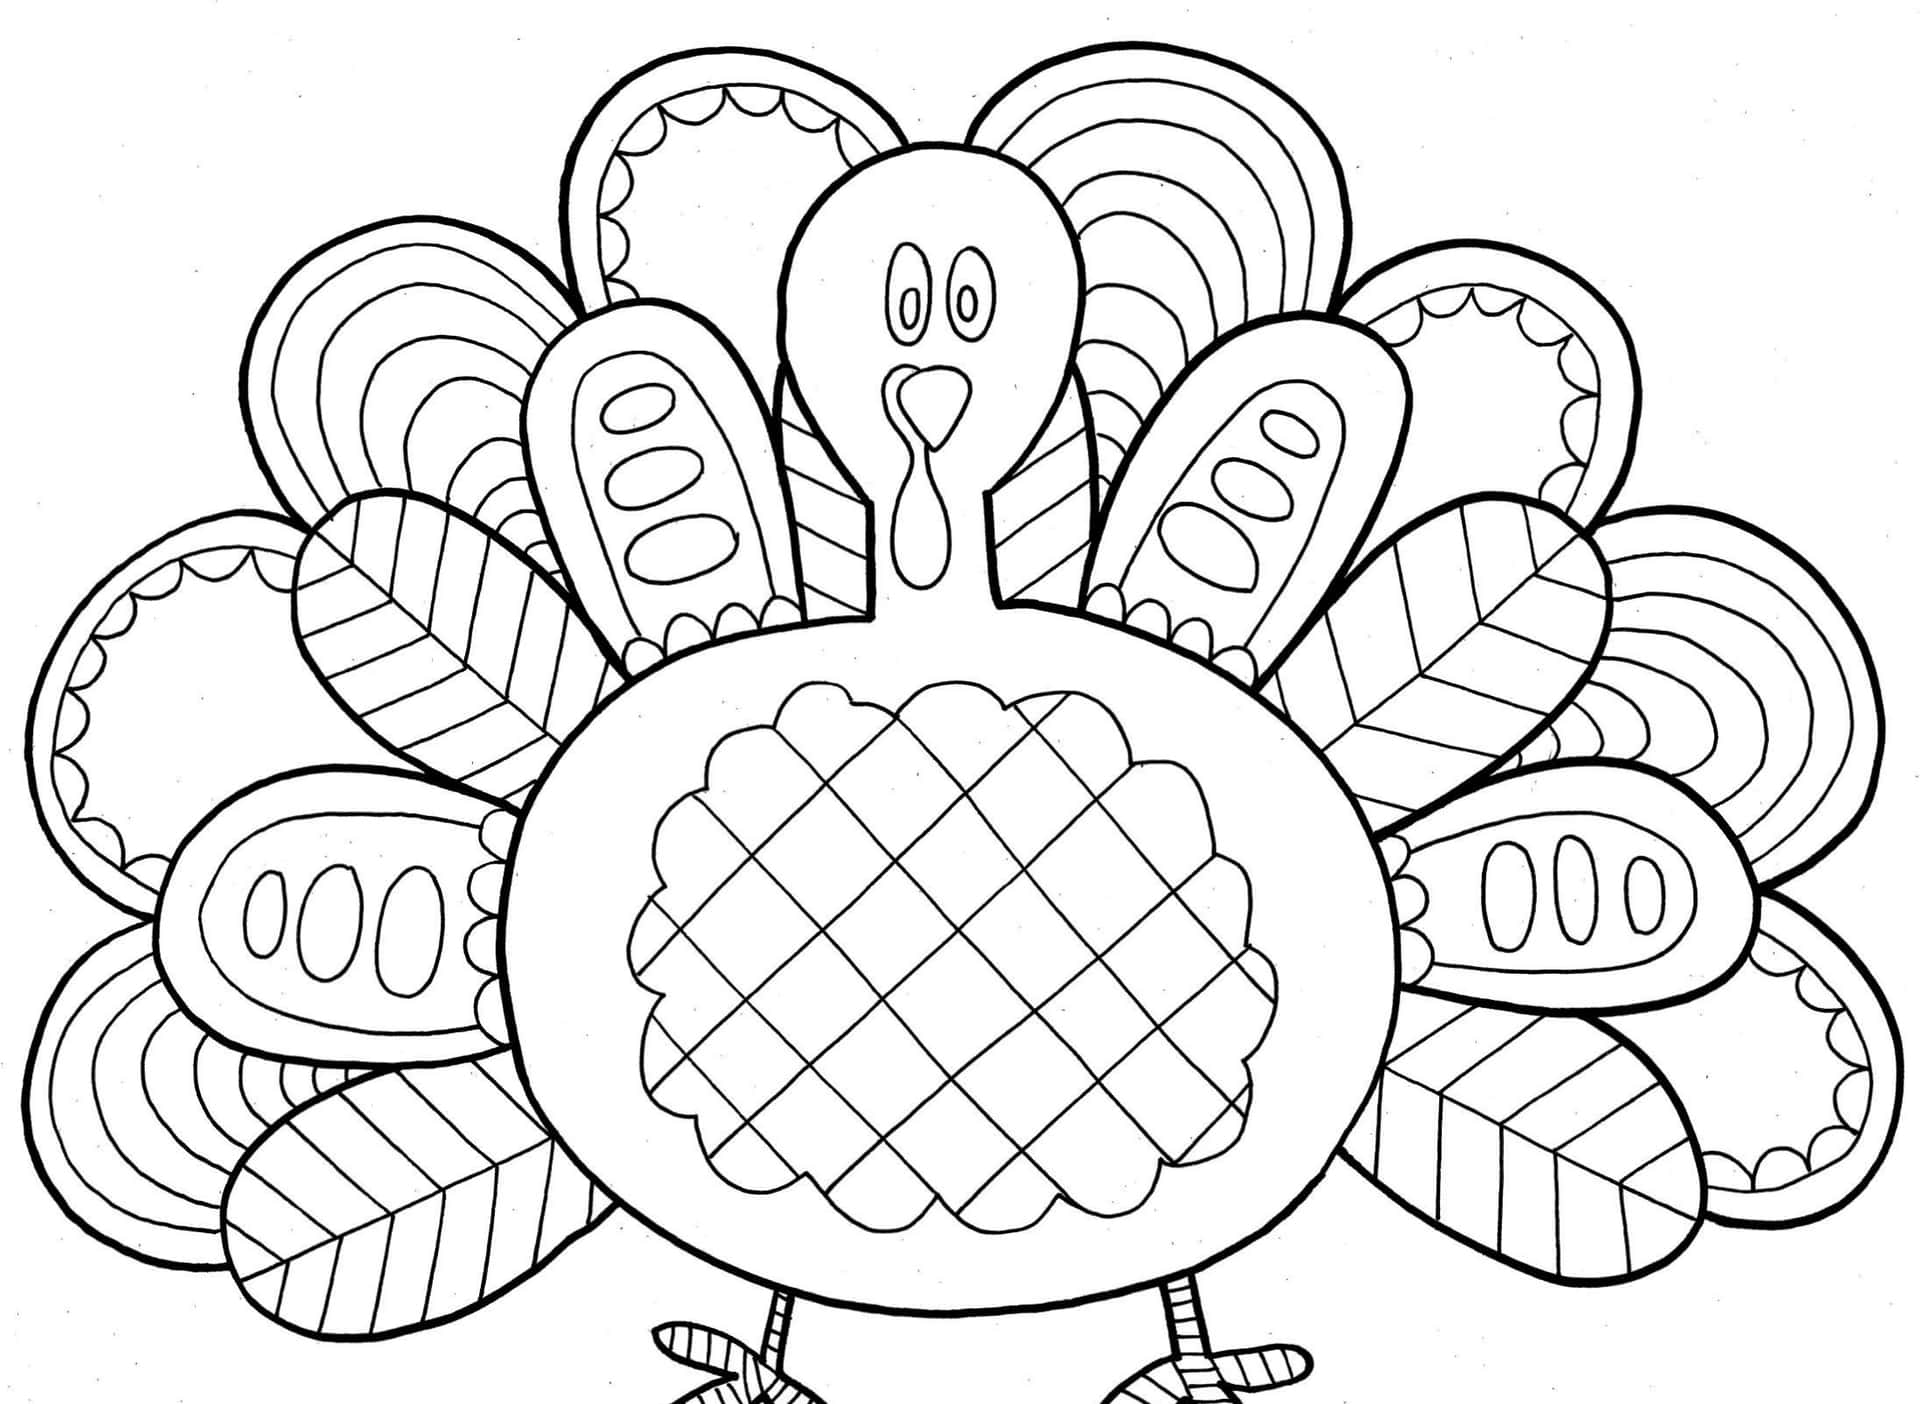 Feiernsie Thanksgiving In Farbe!